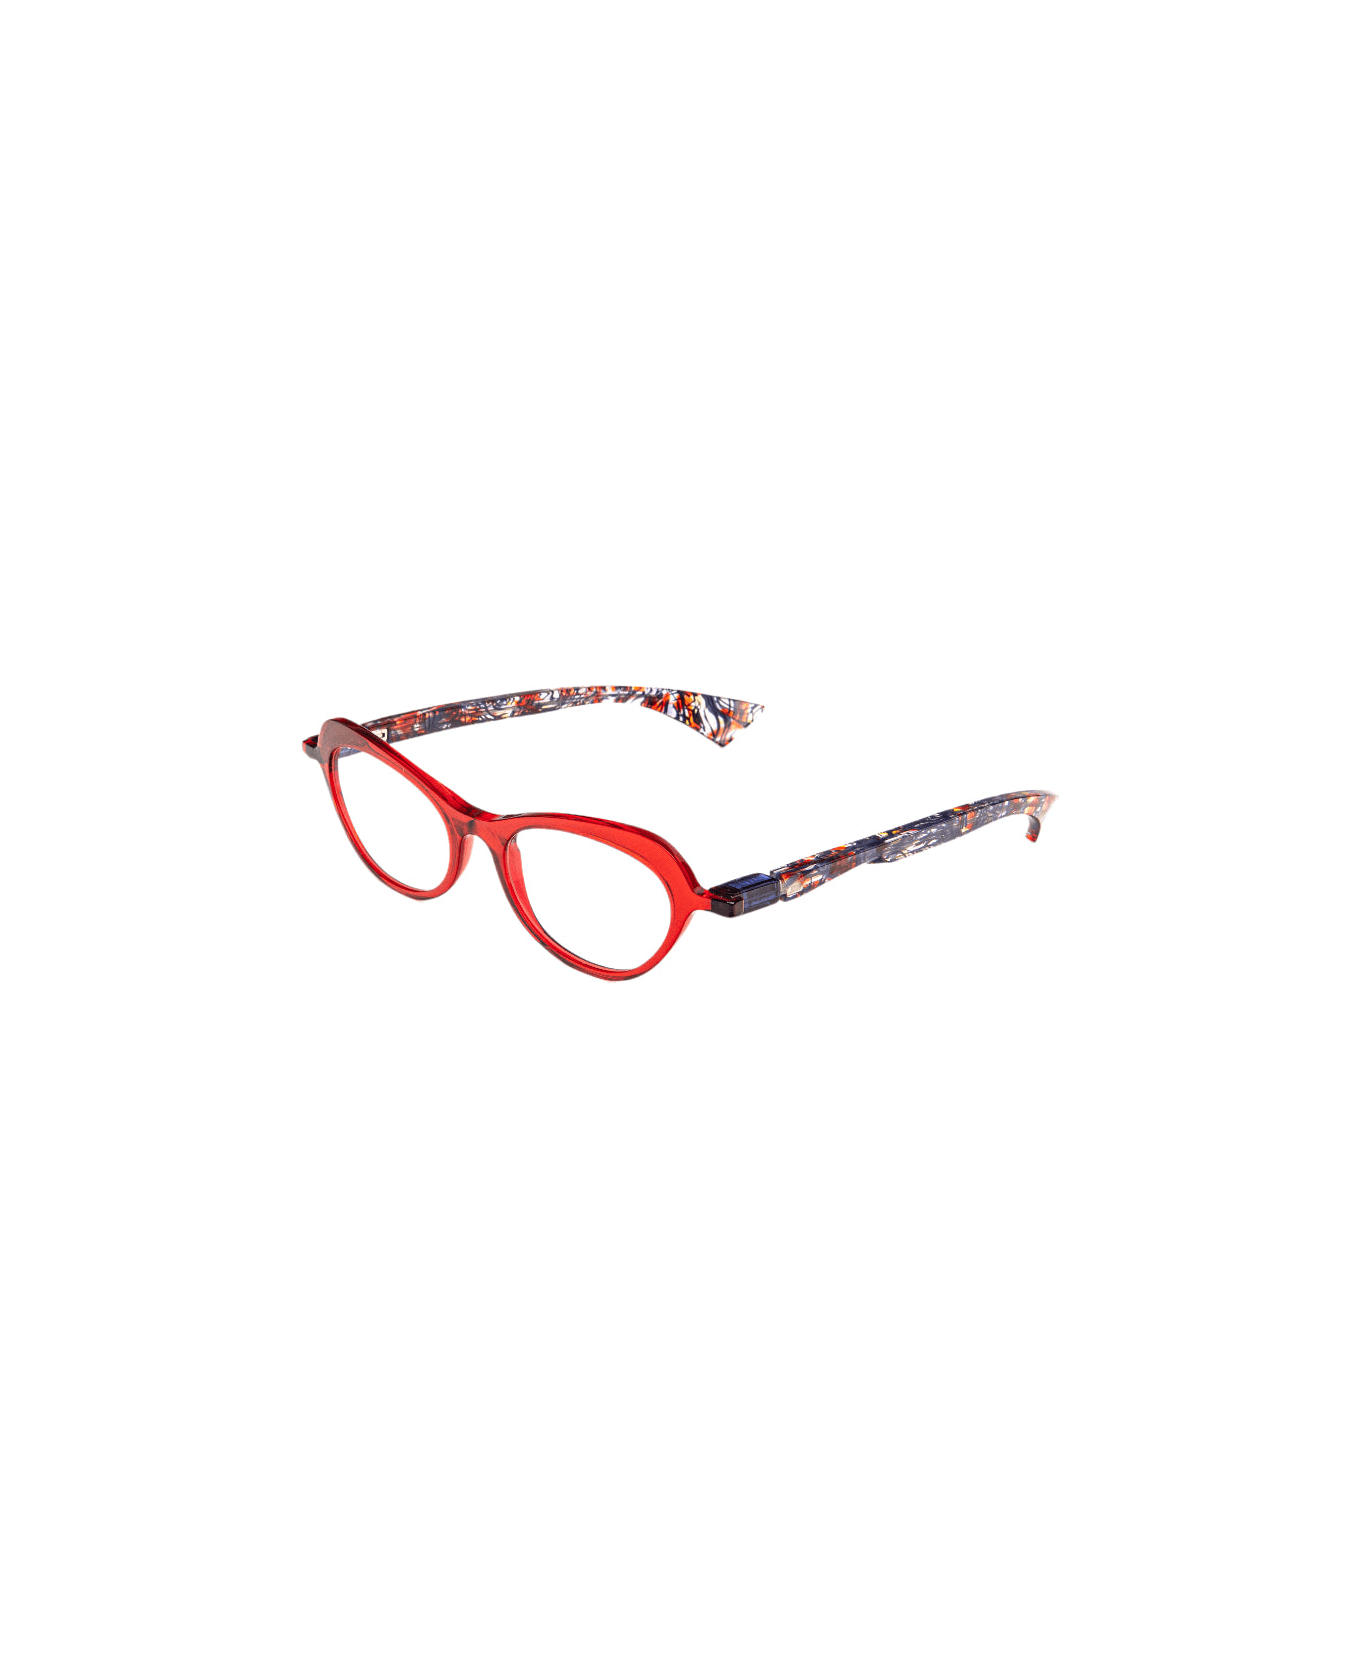 Piero Massaro Pm483 - Red Glasses